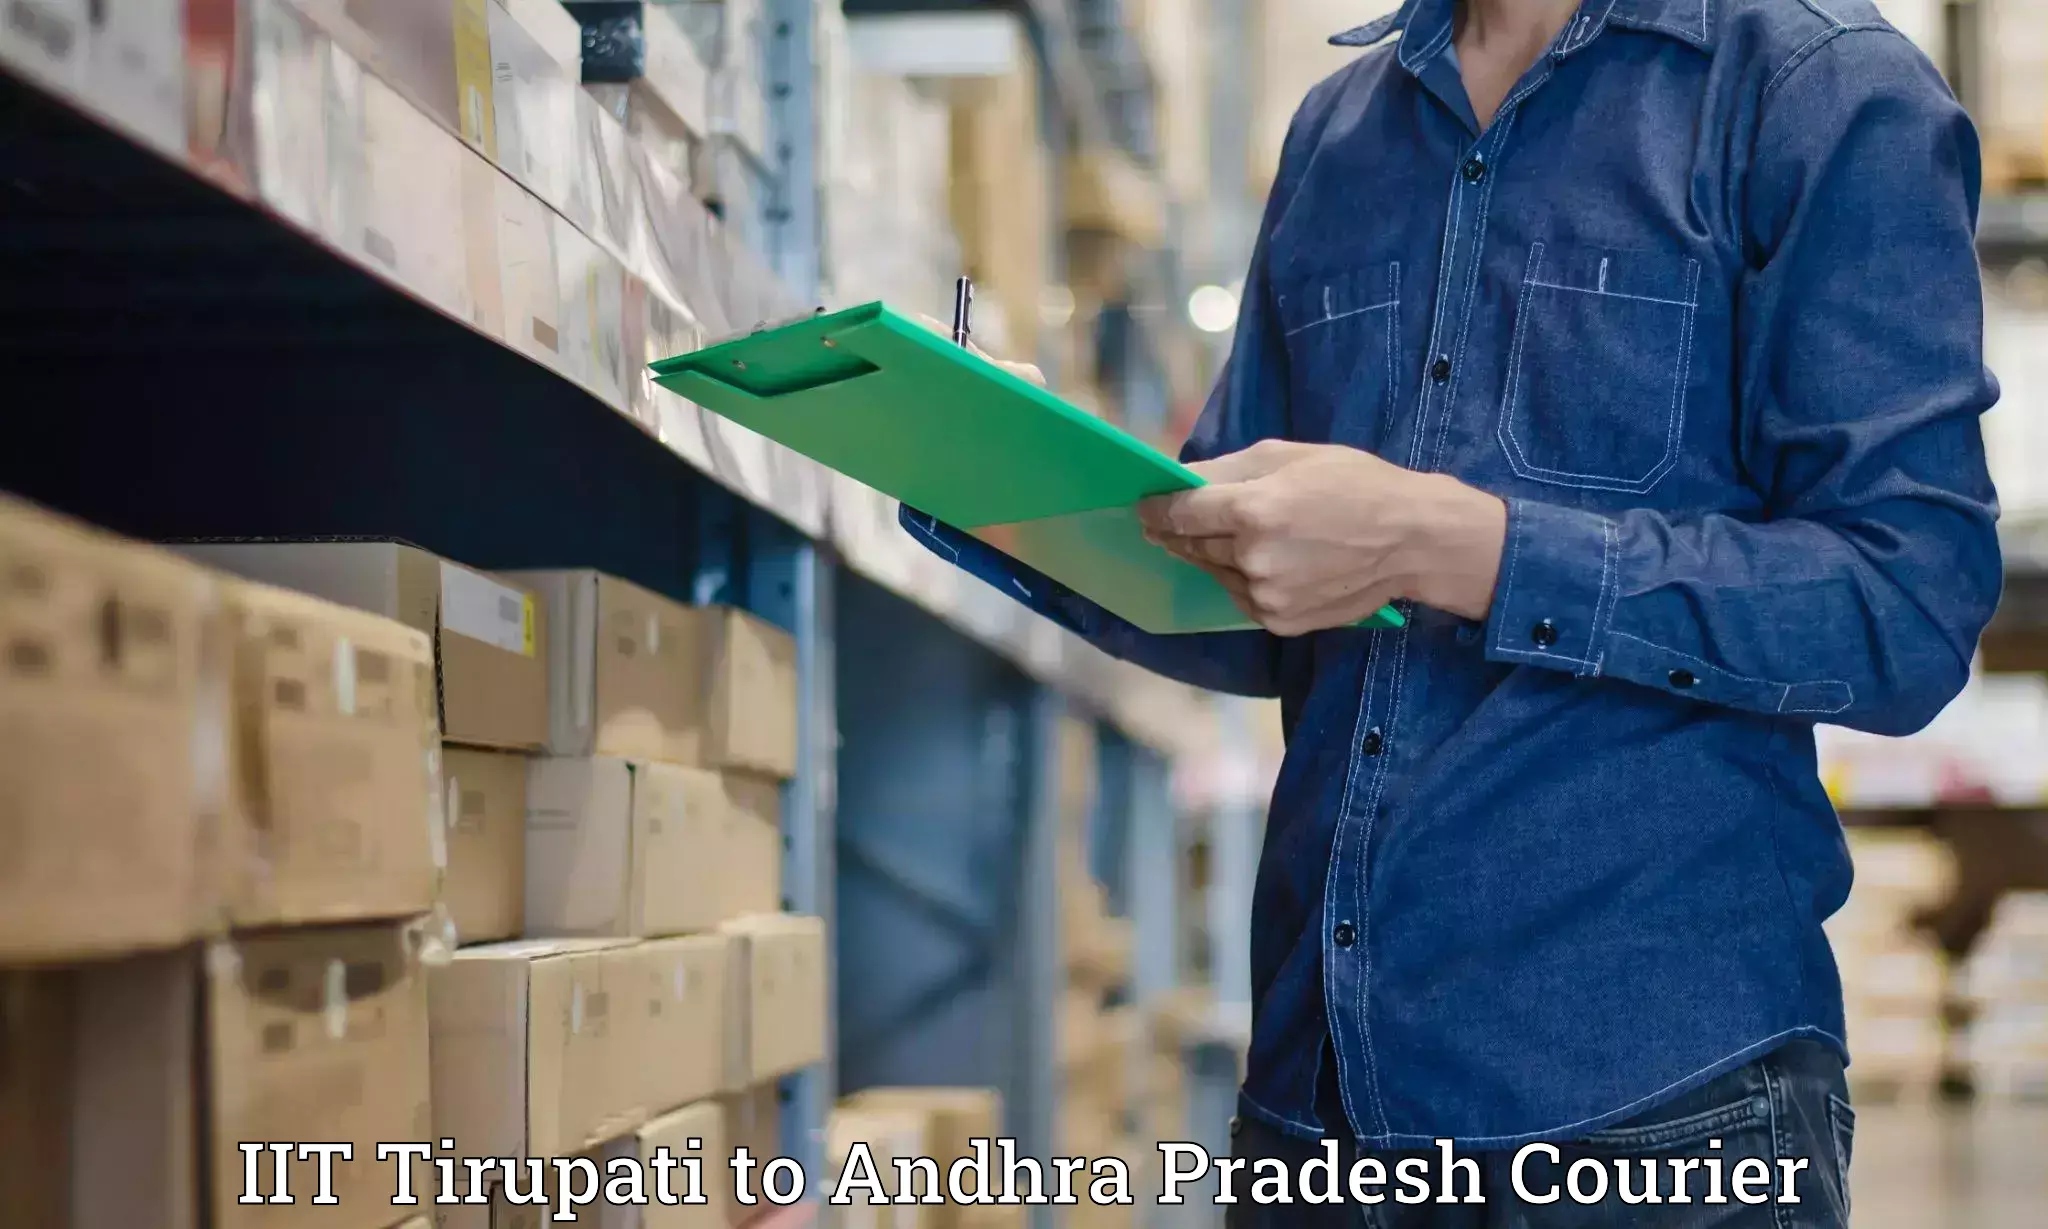 Speedy delivery service IIT Tirupati to Kanigiri